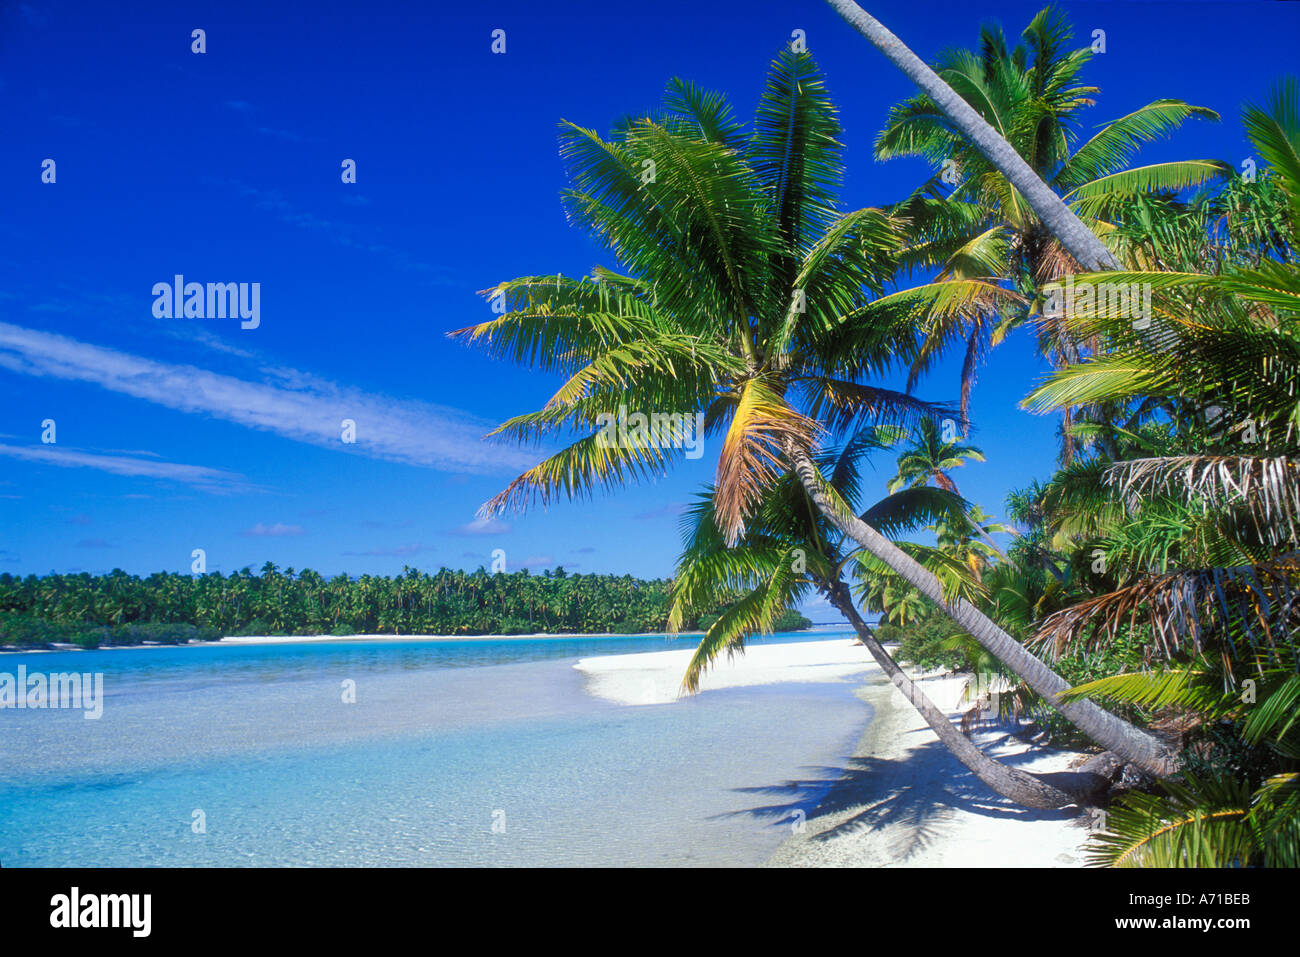 Coconut palm trees on tropical beach Aitutaki Lagoon Cook Islands South ...